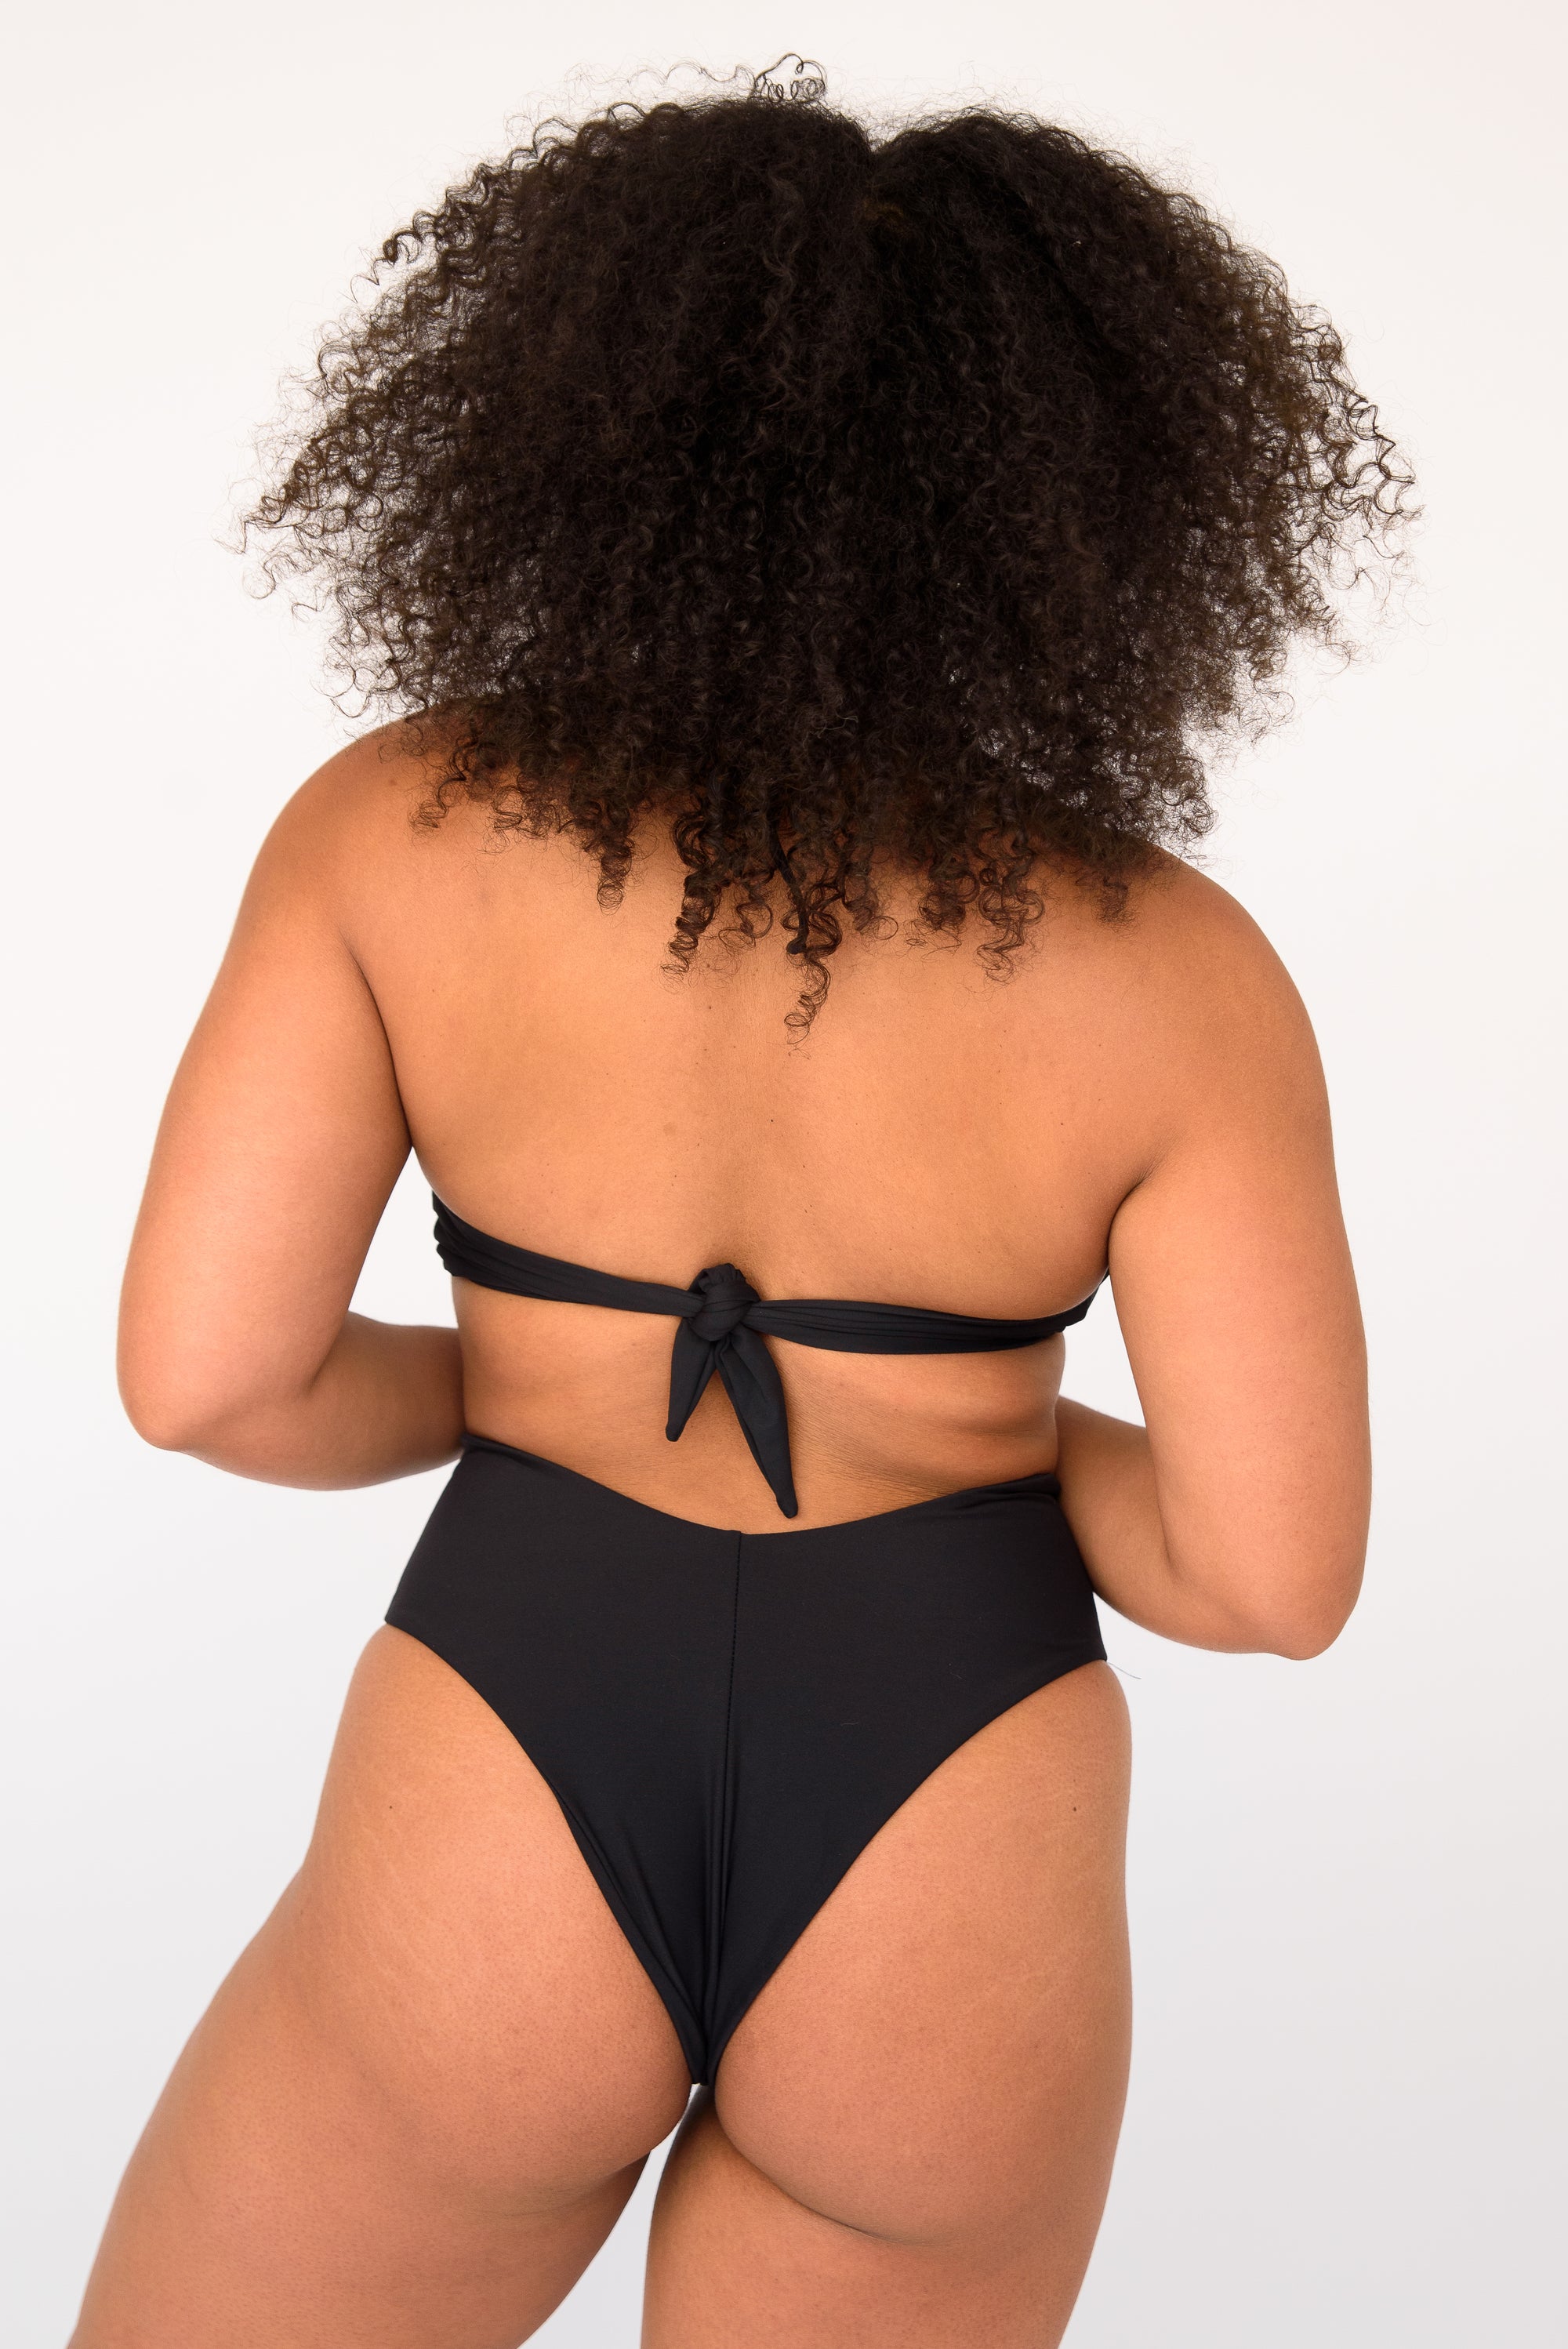  MELYUM Womens High Waisted Swimsuits Bottom Padded Bathing Suits  Bikini Sets Top Two Piece Swimwear Black : Clothing, Shoes & Jewelry